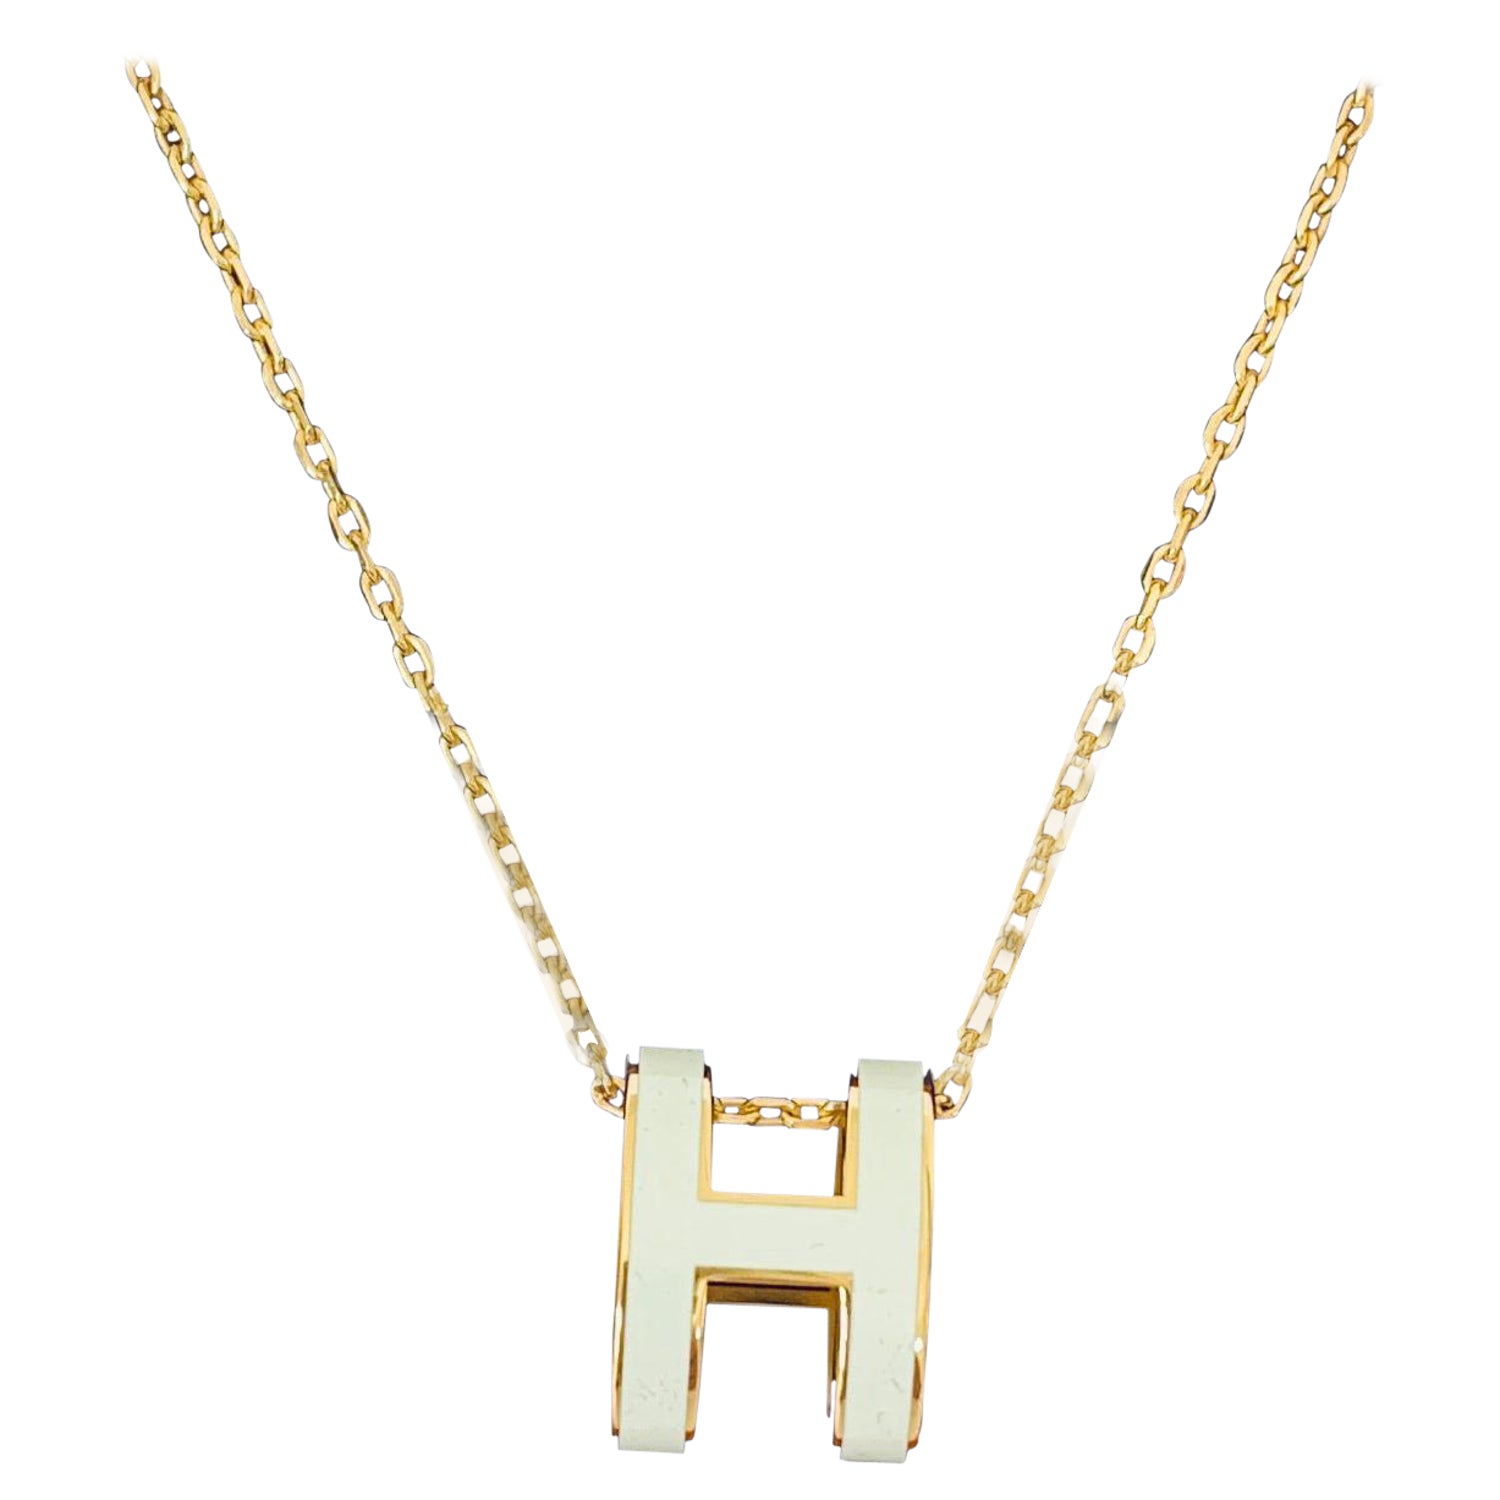 Hermes Red Enamel Gold Plated Mini Pop H Pendant Necklace